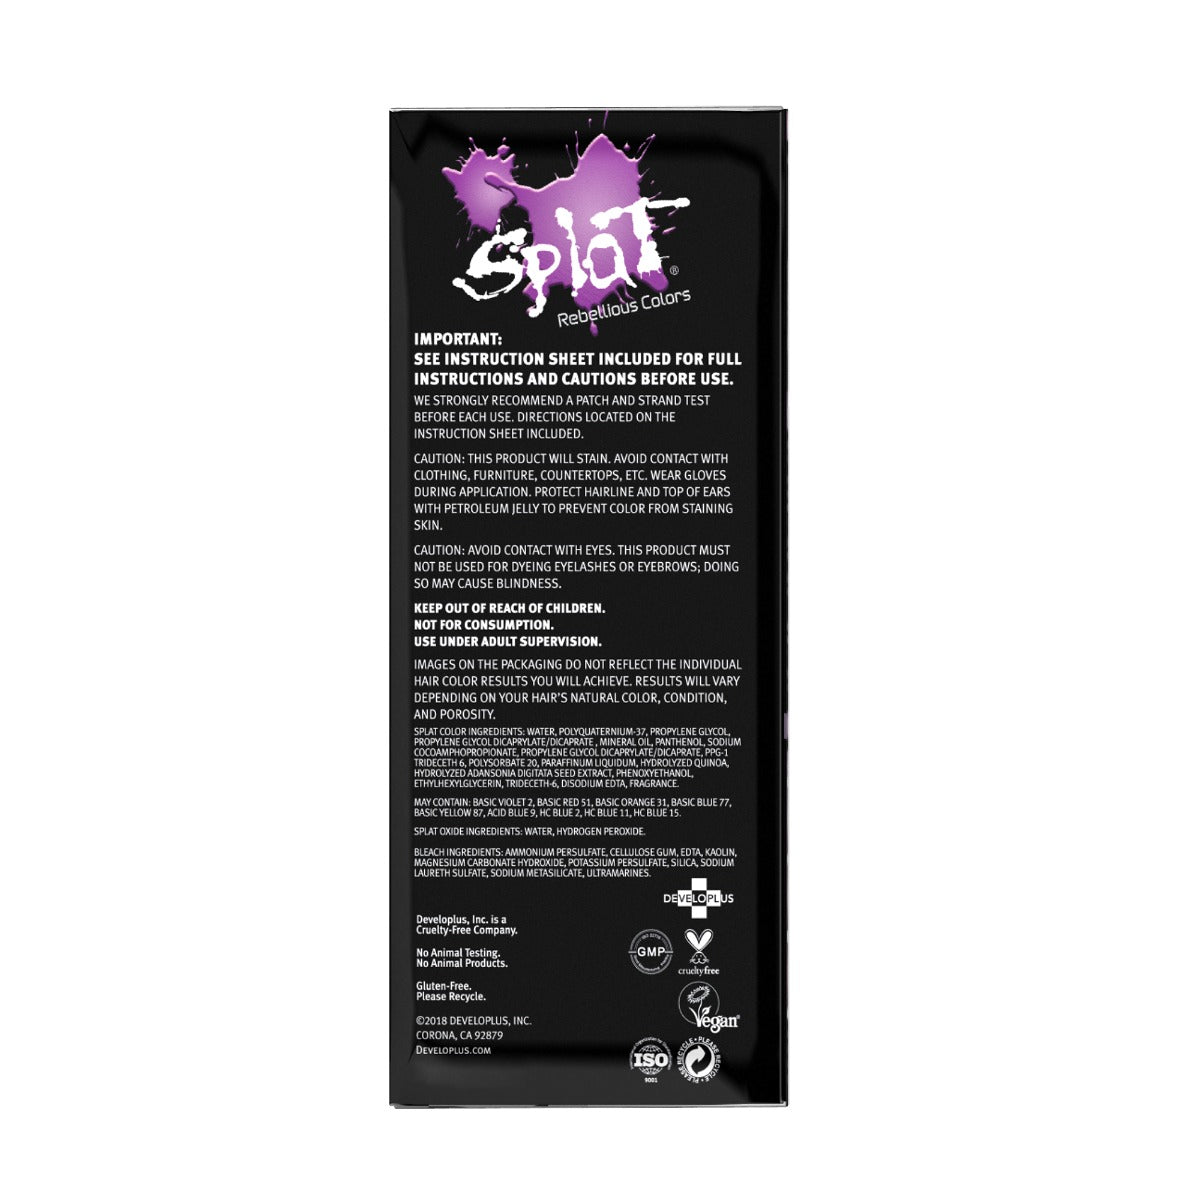 Rose Quartz: Original Soft Pink Semi-Permanent Hair Dye Complete Kit with Bleach